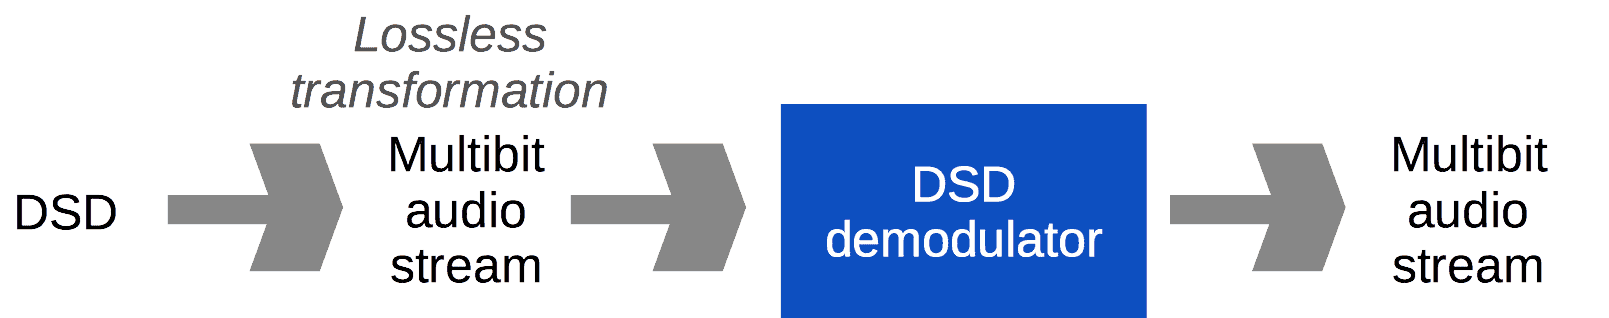 DSD demodulator